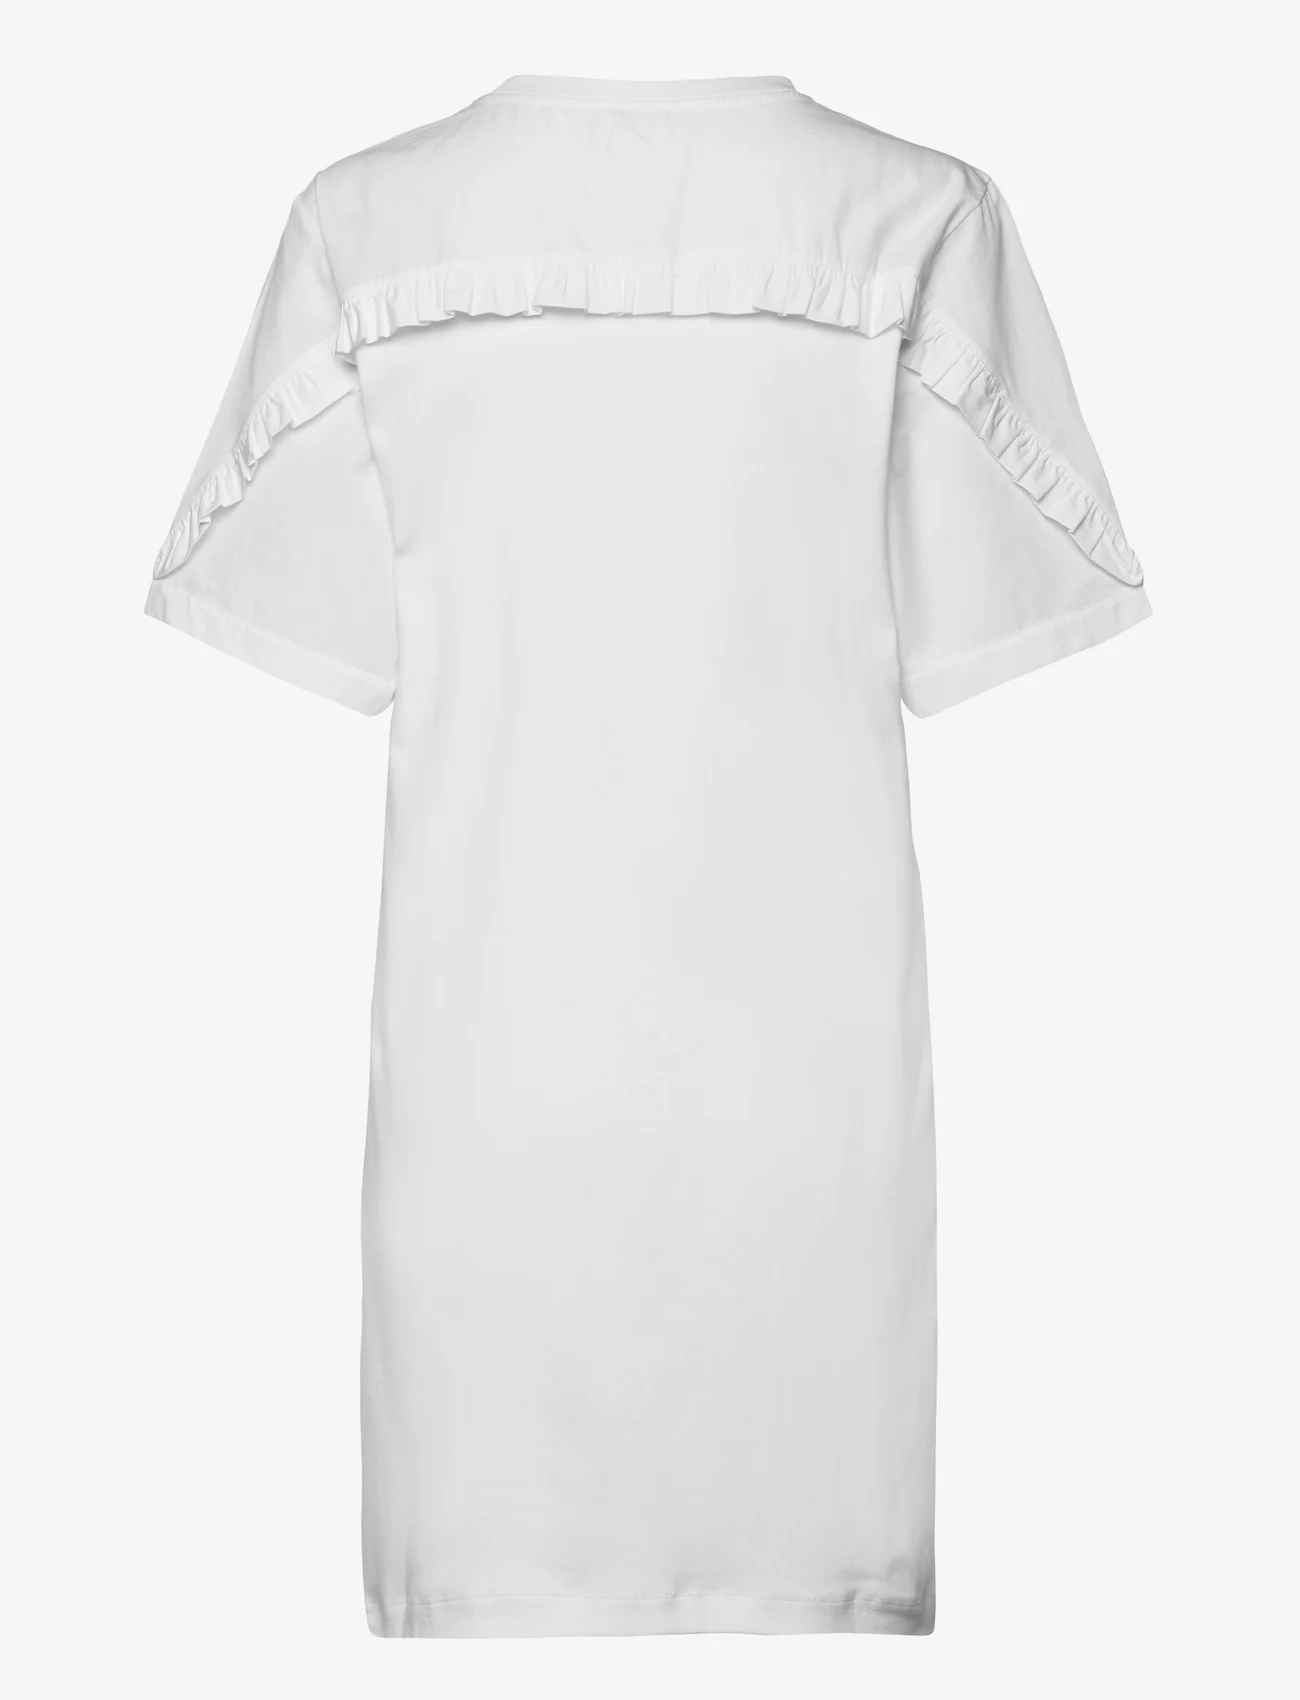 See by Chloé - Dress - t-shirt jurken - white - 1